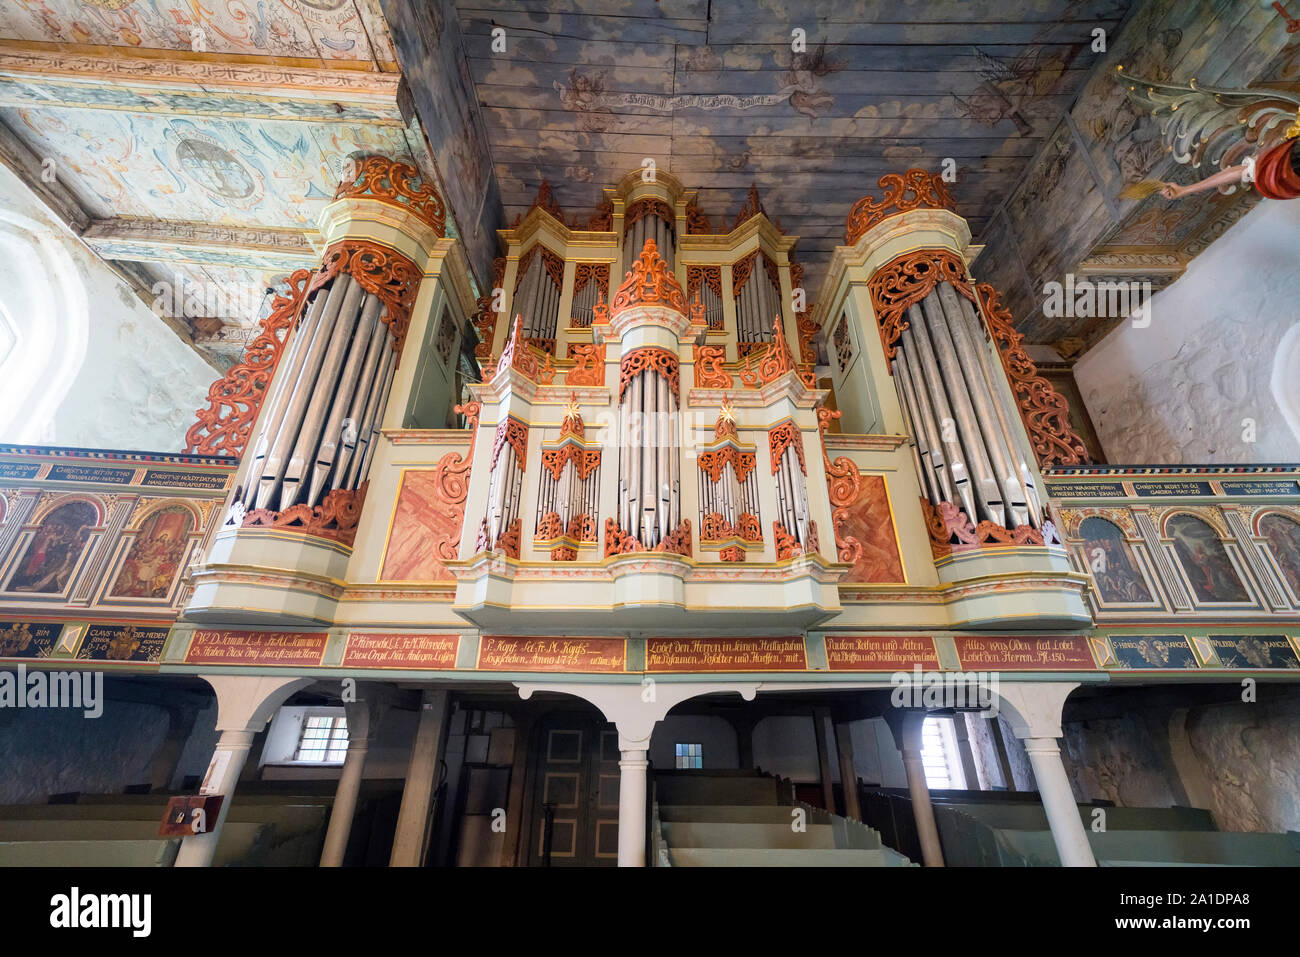 Arp Schnitger organ, St. Jacobi Church, Lüdingworth, Cuxhaven, Germany; Europe Stock Photo